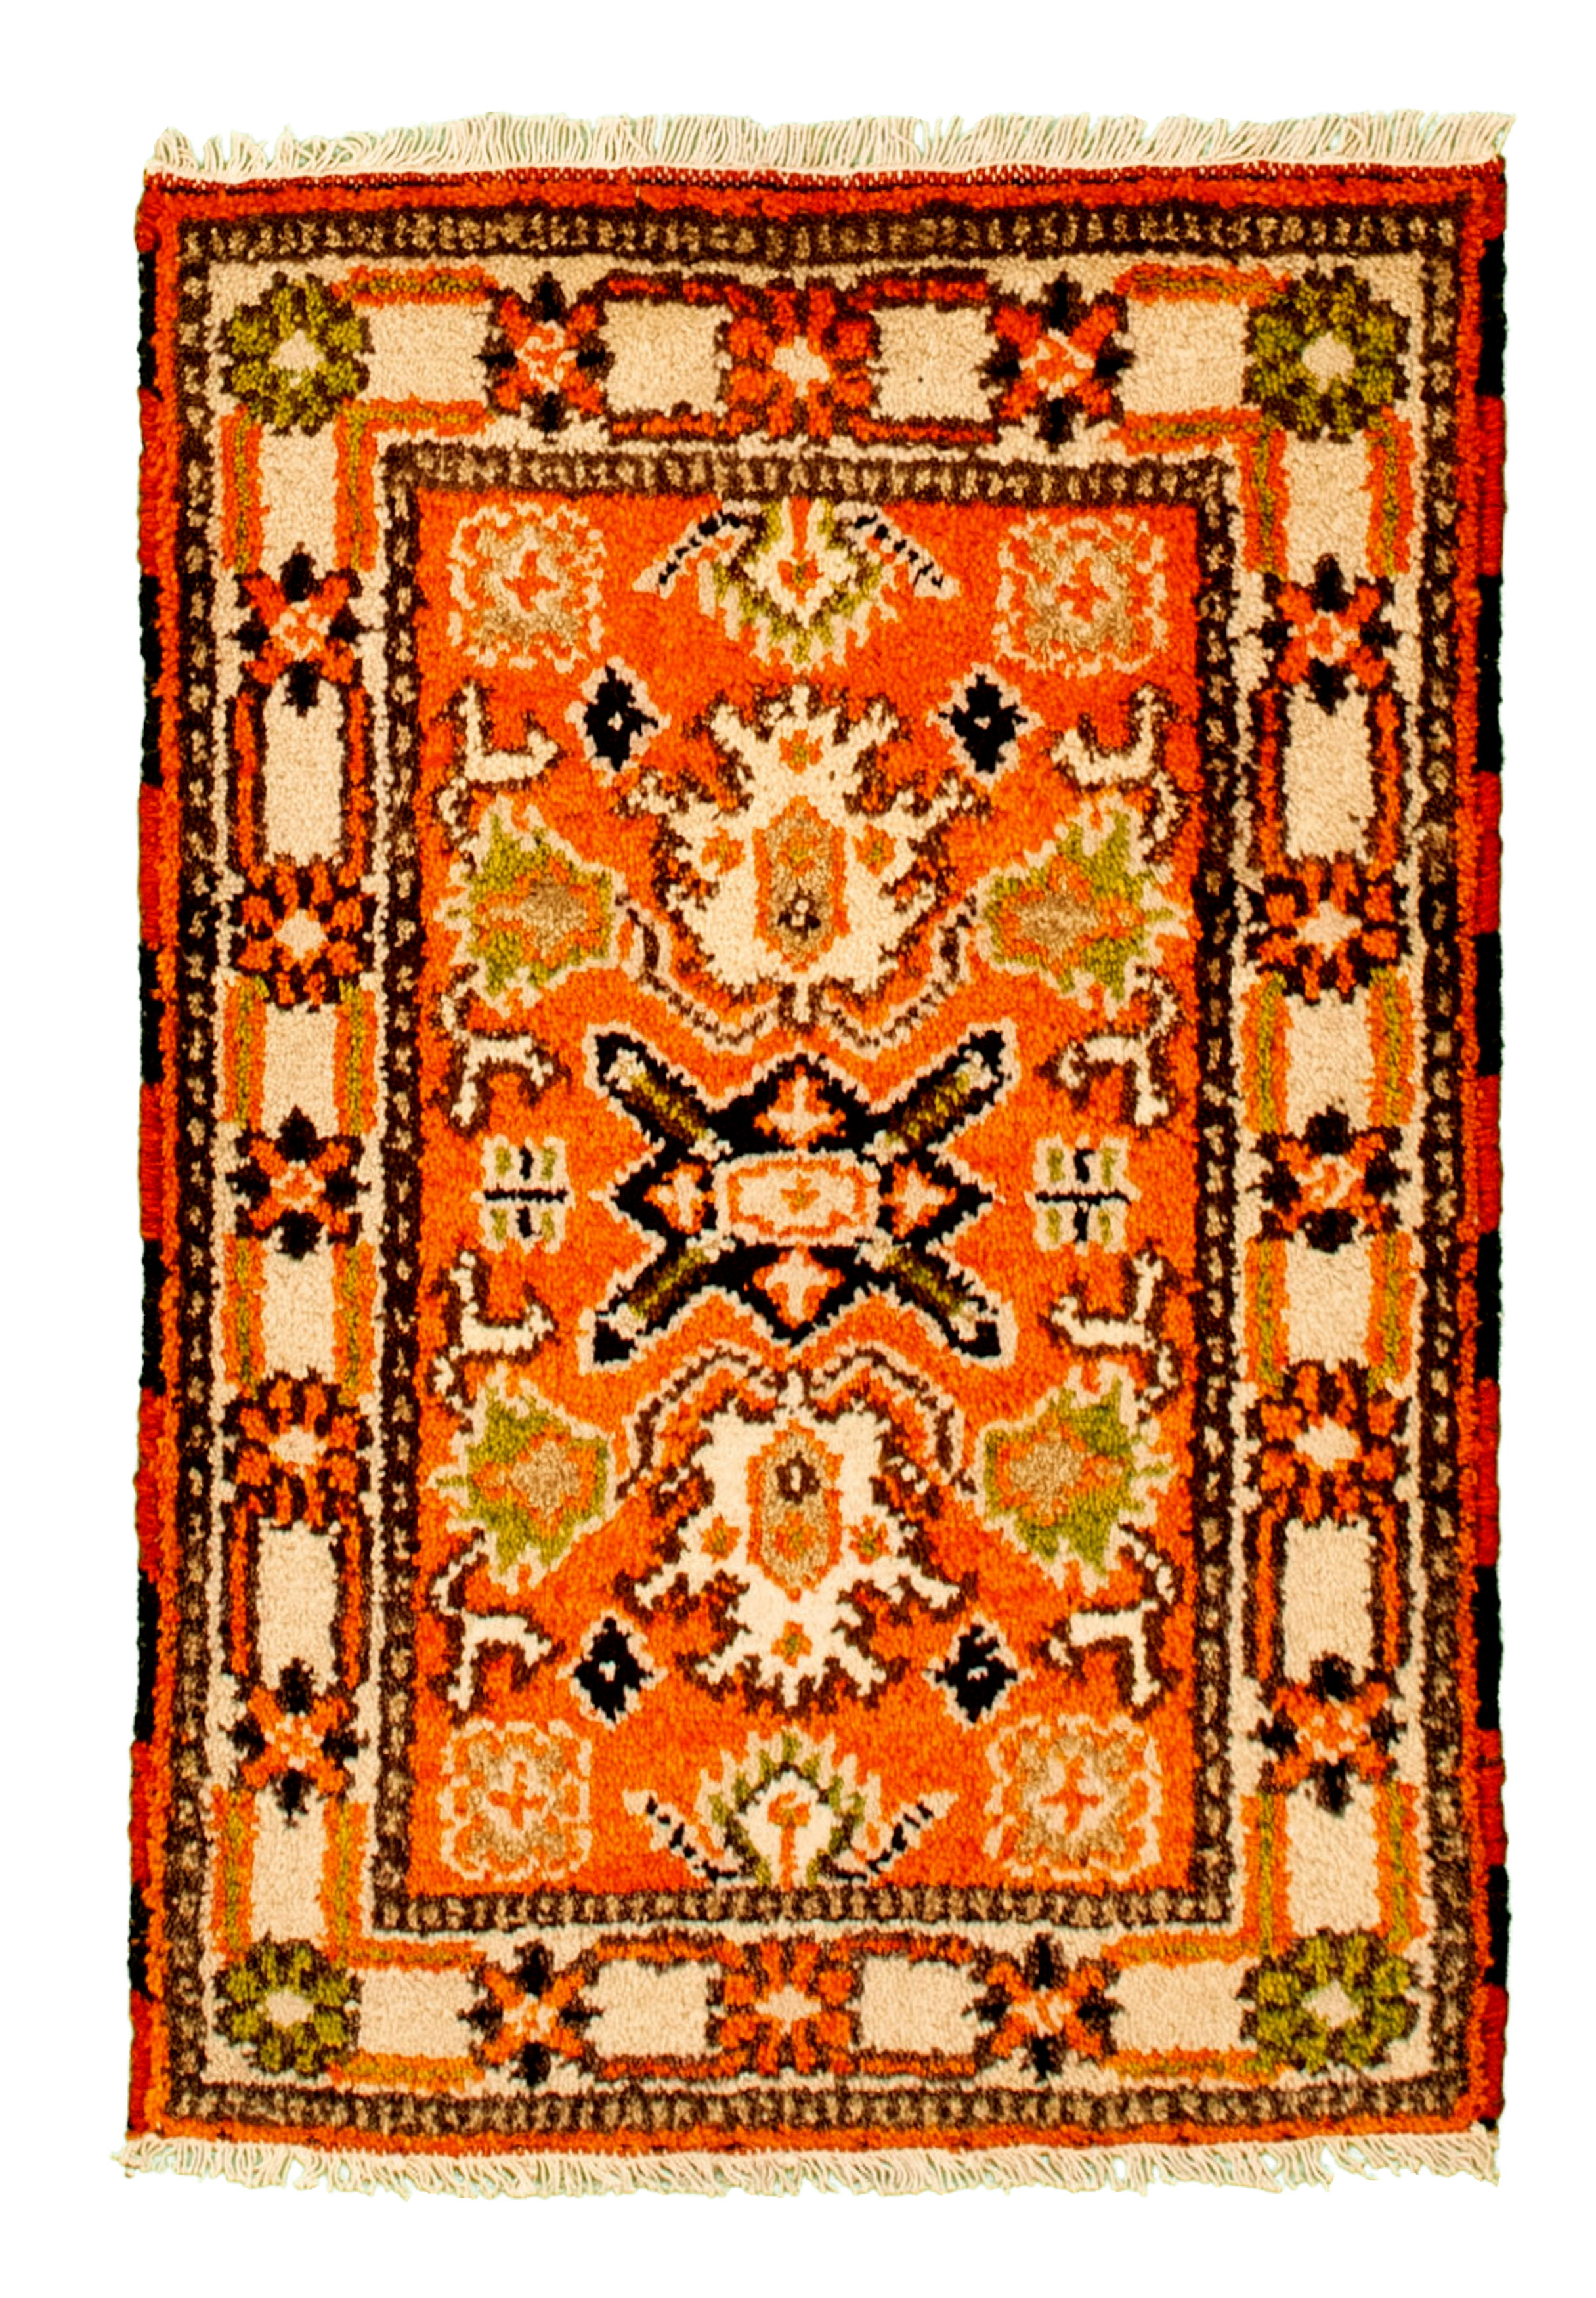 Hand-knotted Royal Kazak Orange Cotton Rug 2'1" x 3'0"  Size: 2'1" x 3'0"  